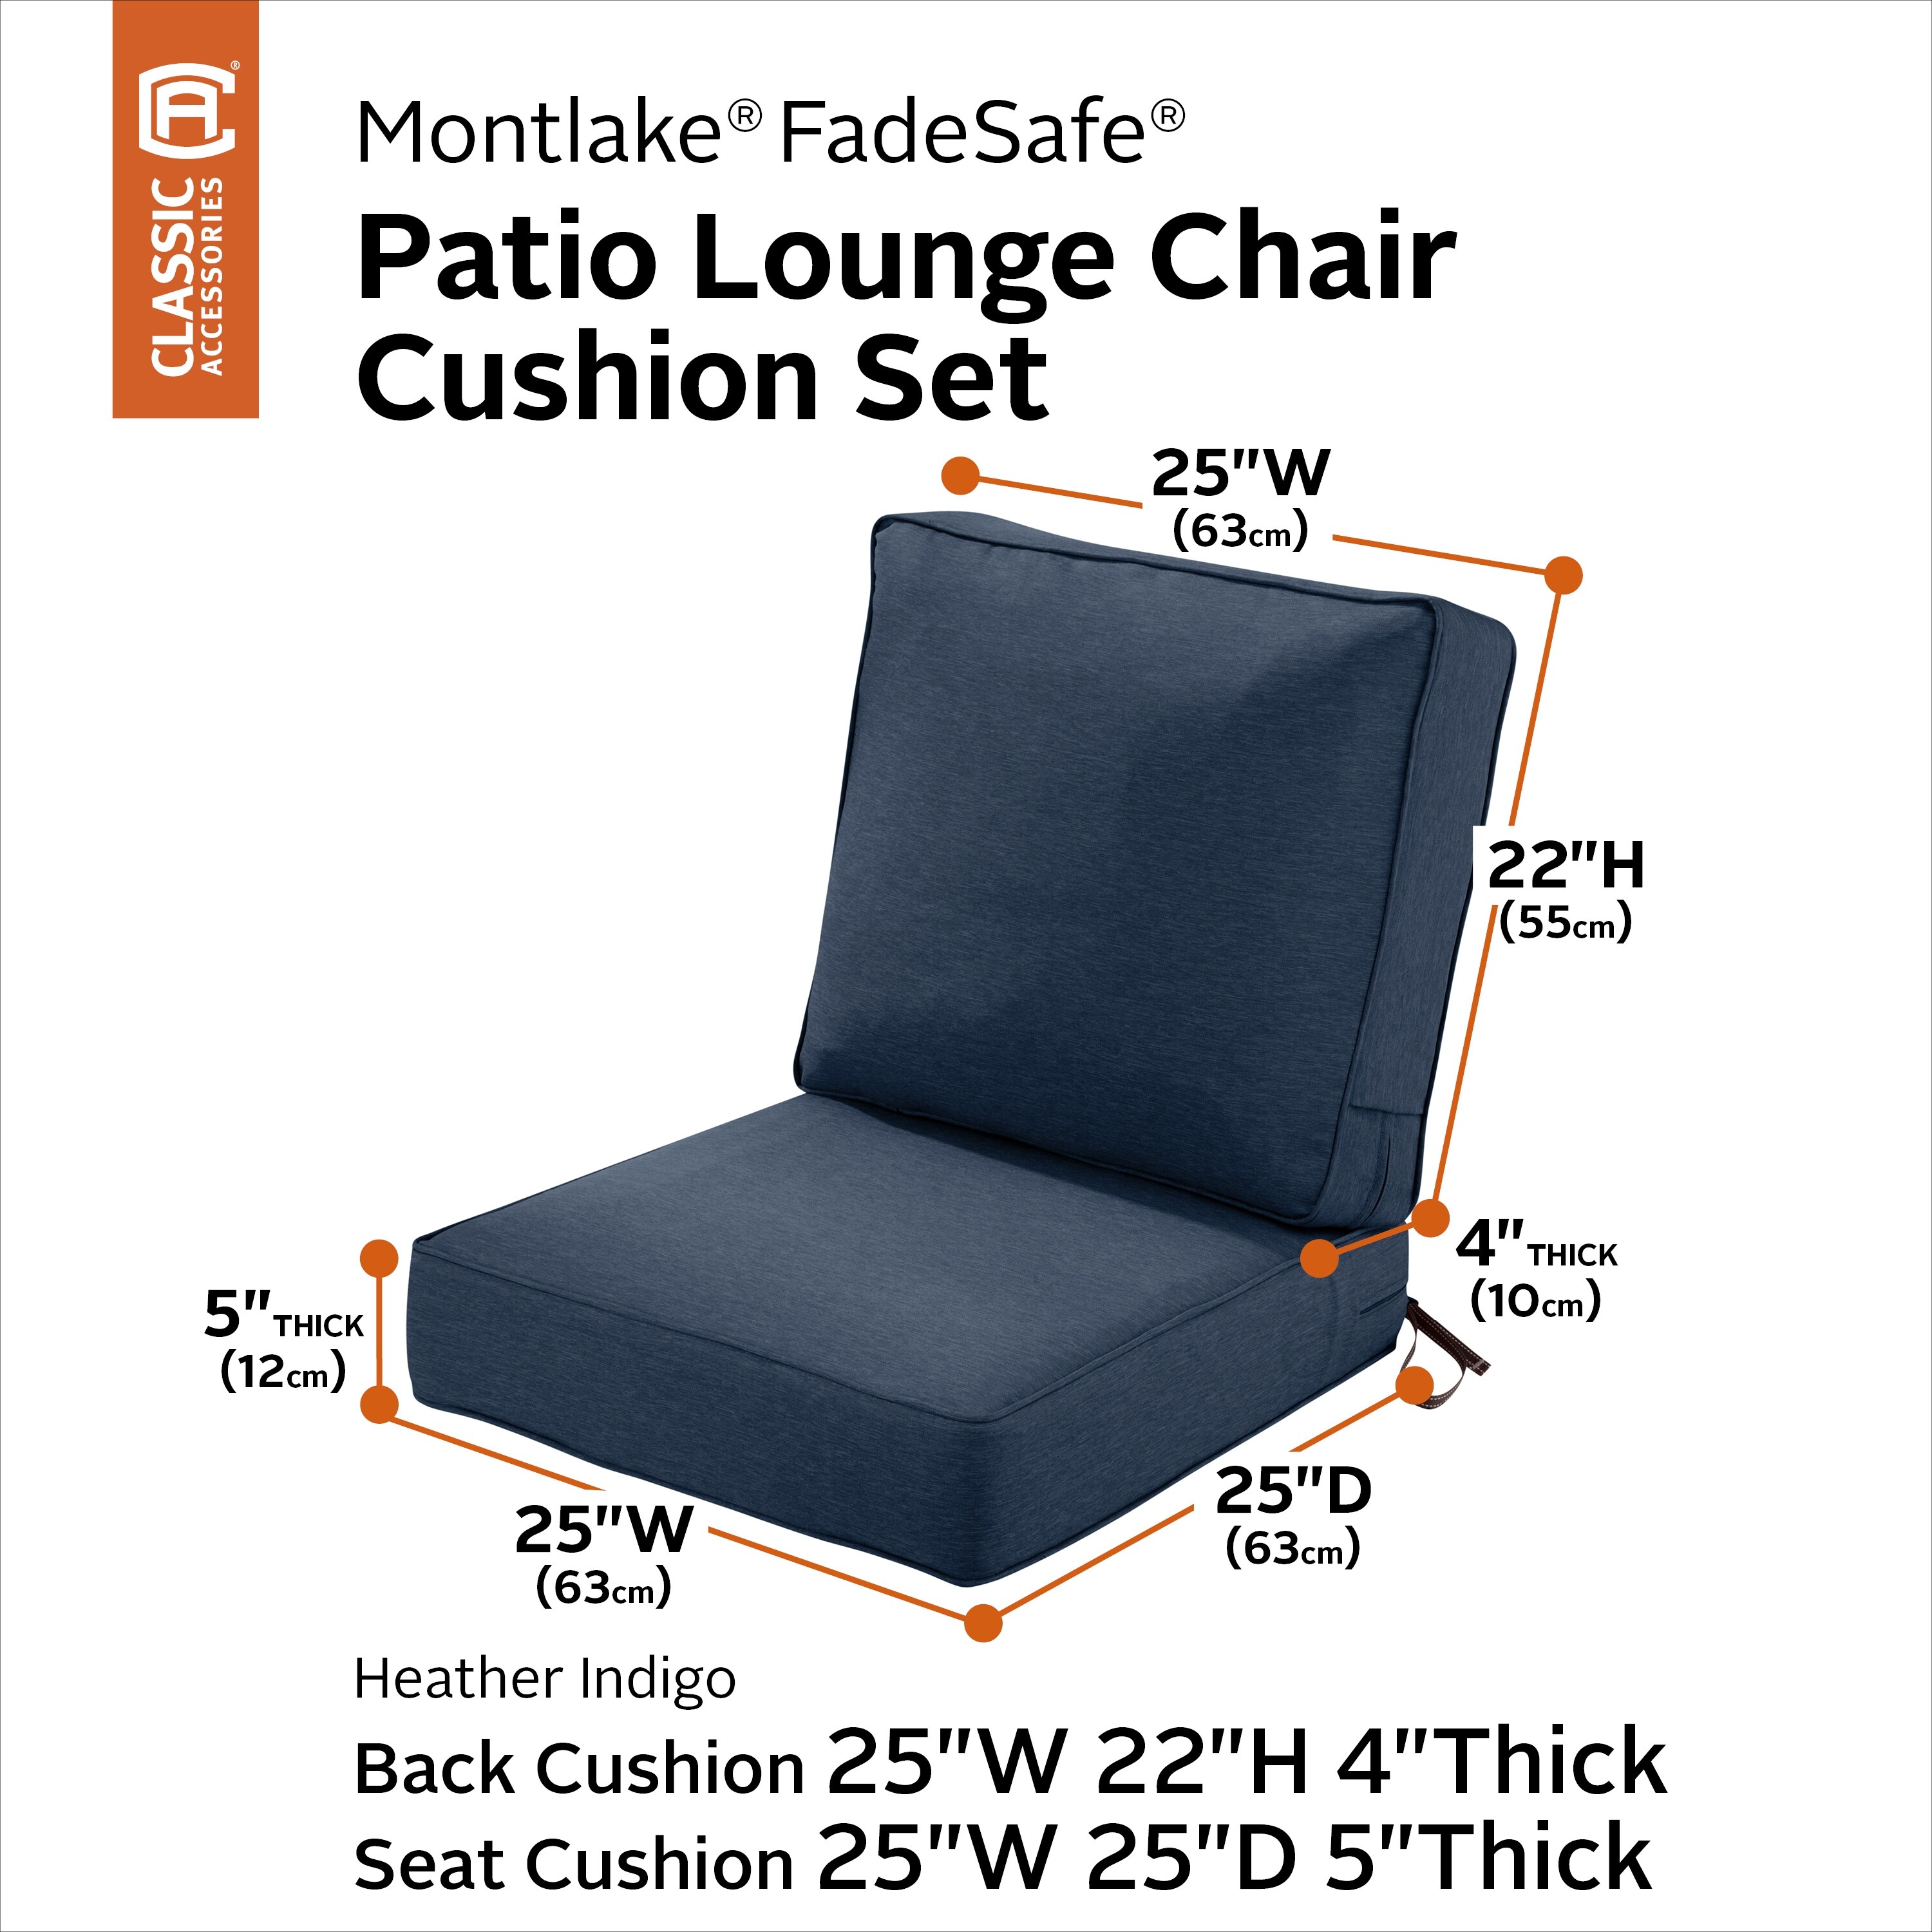 Classic Accessories Montlake FadeSafe Patio Lounge Chair Cushion Set